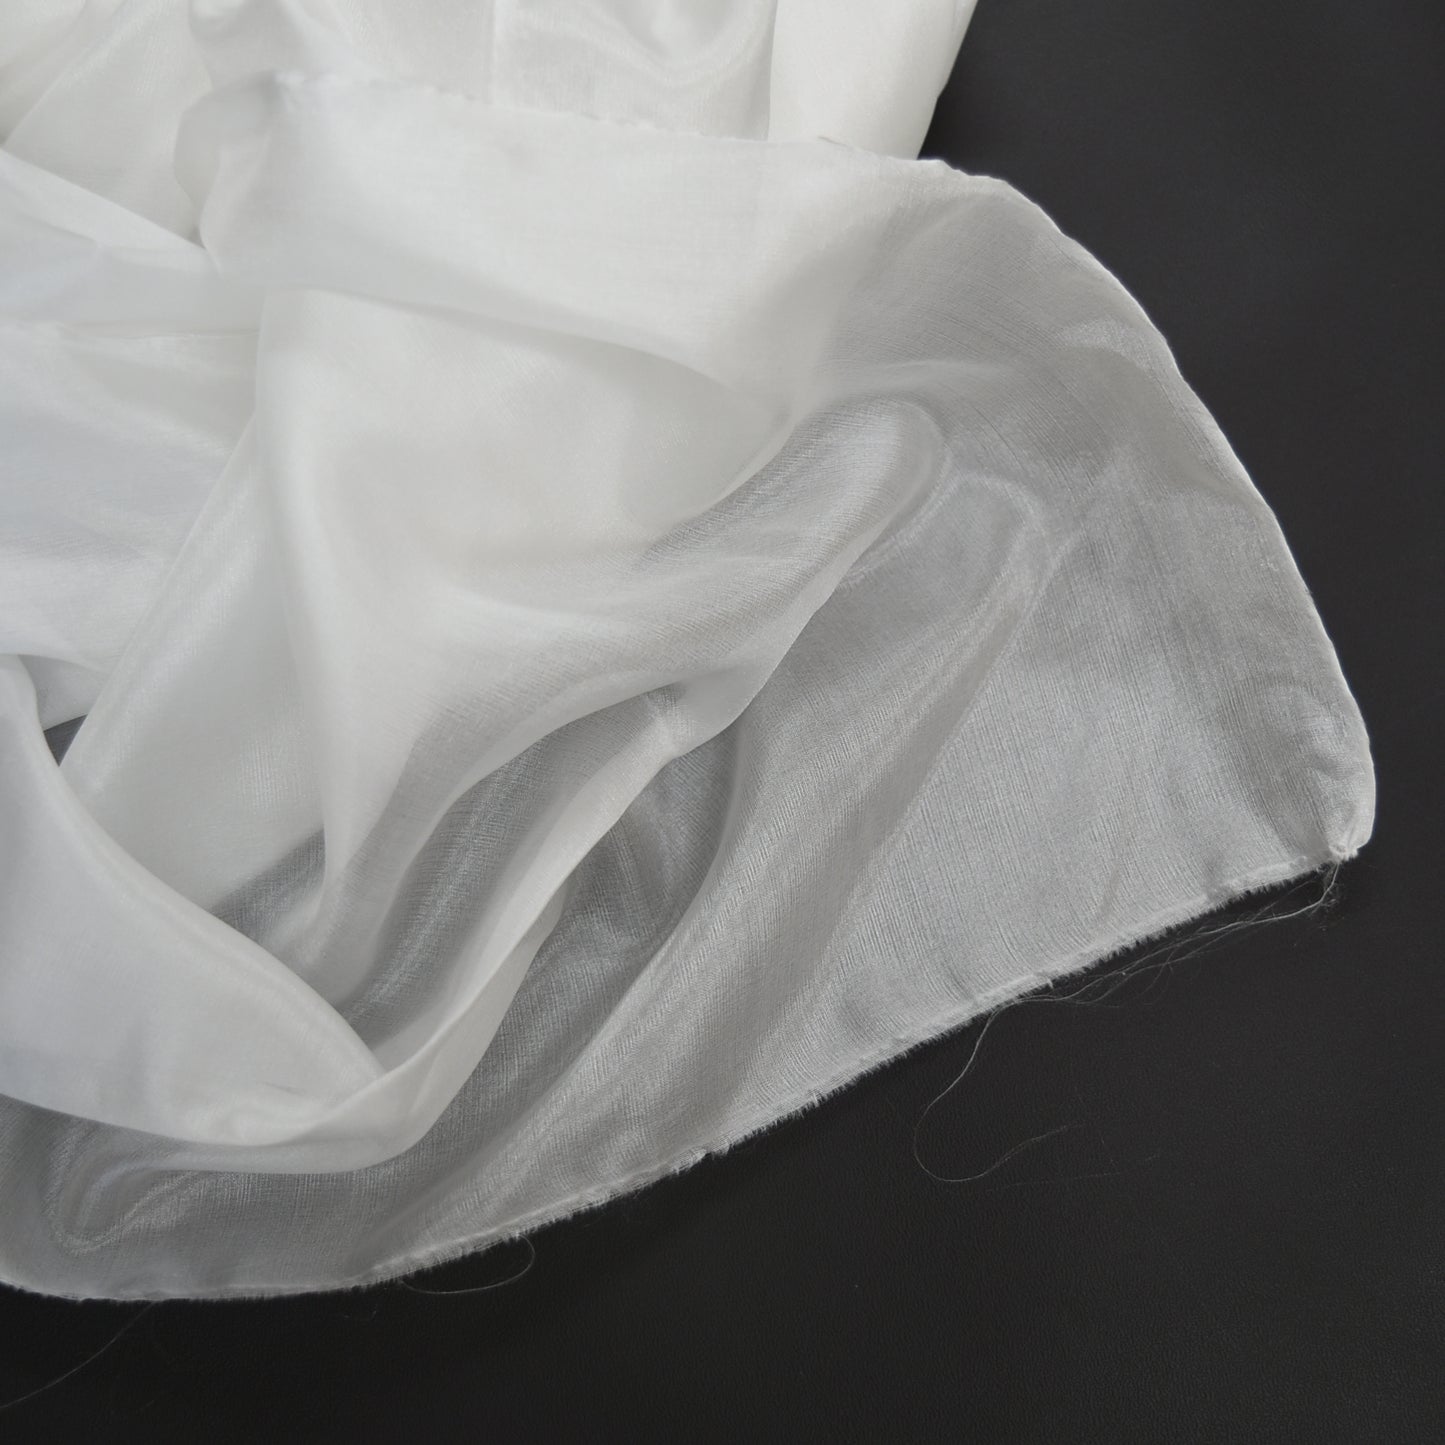 Mulberry Silk Paj Fabric - Scarf Length for Nuno Felting - Undyed White 5mm| Silk Fabric | Sally Ridgway | Shop Wool, Felt and Fibre Online